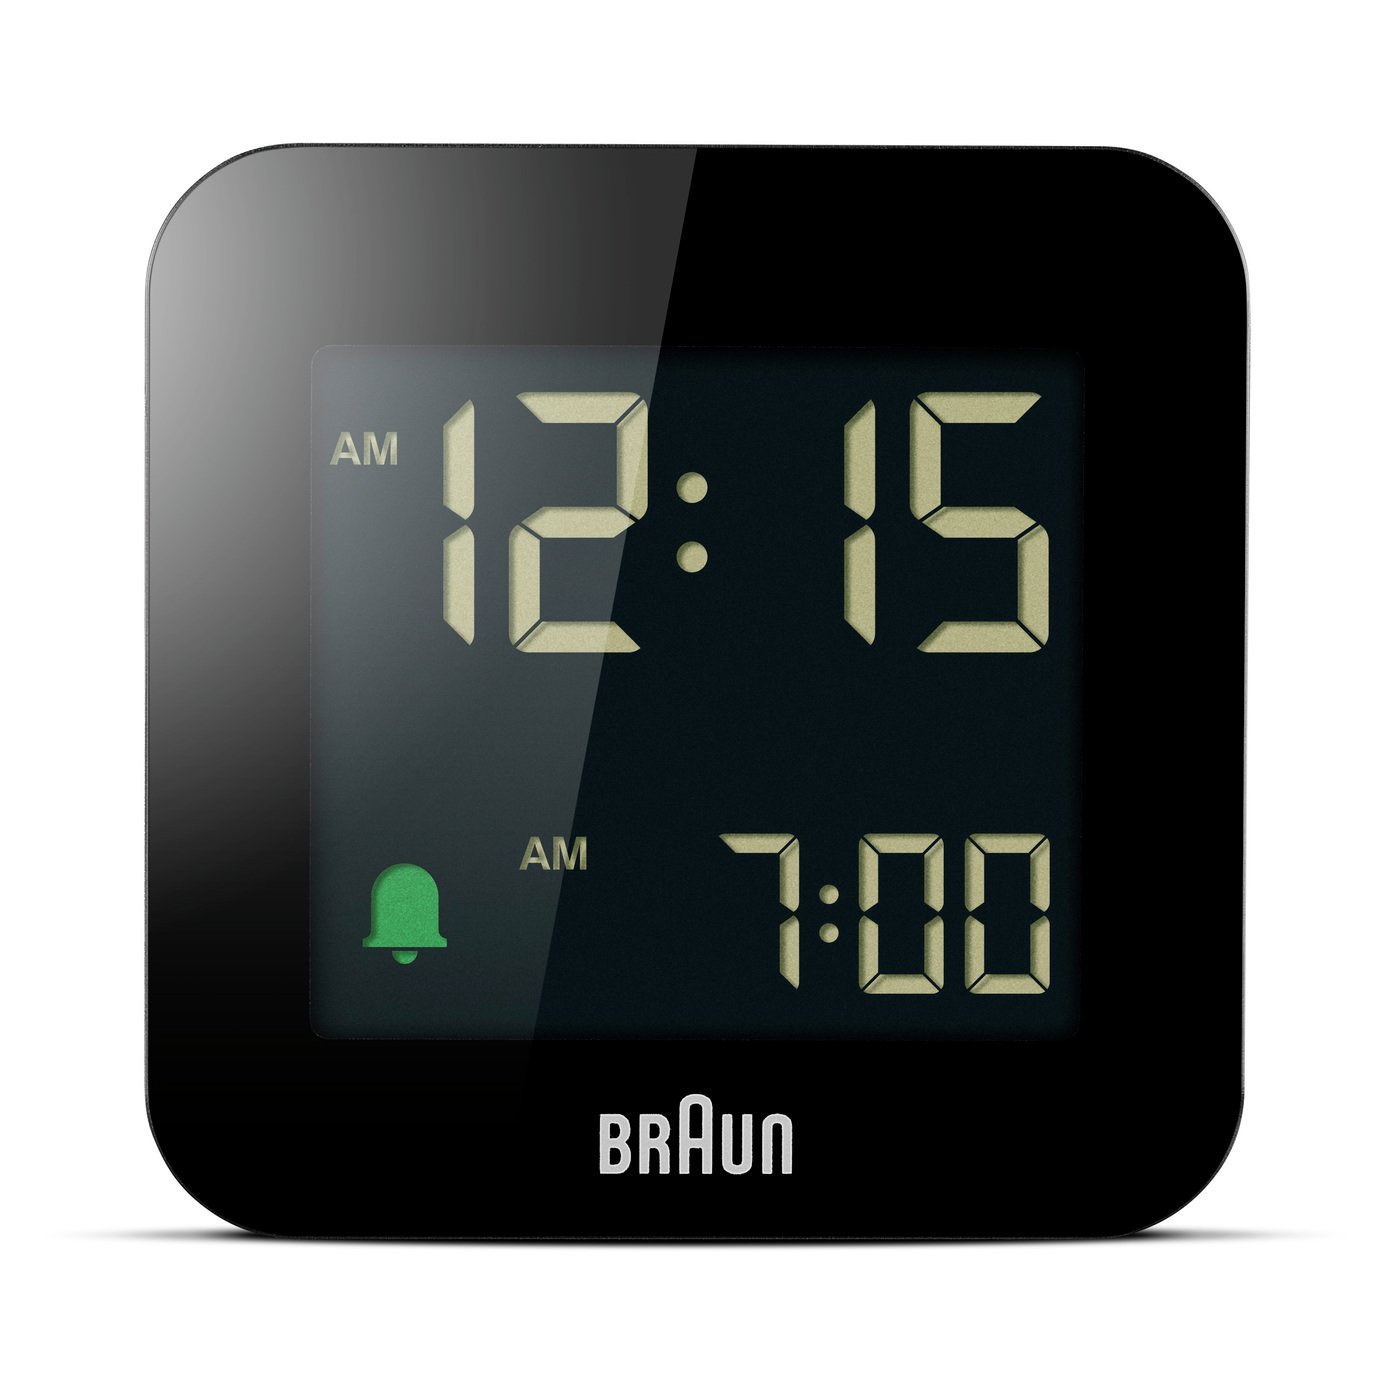 Braun Digital Travel Alarm Clock Review